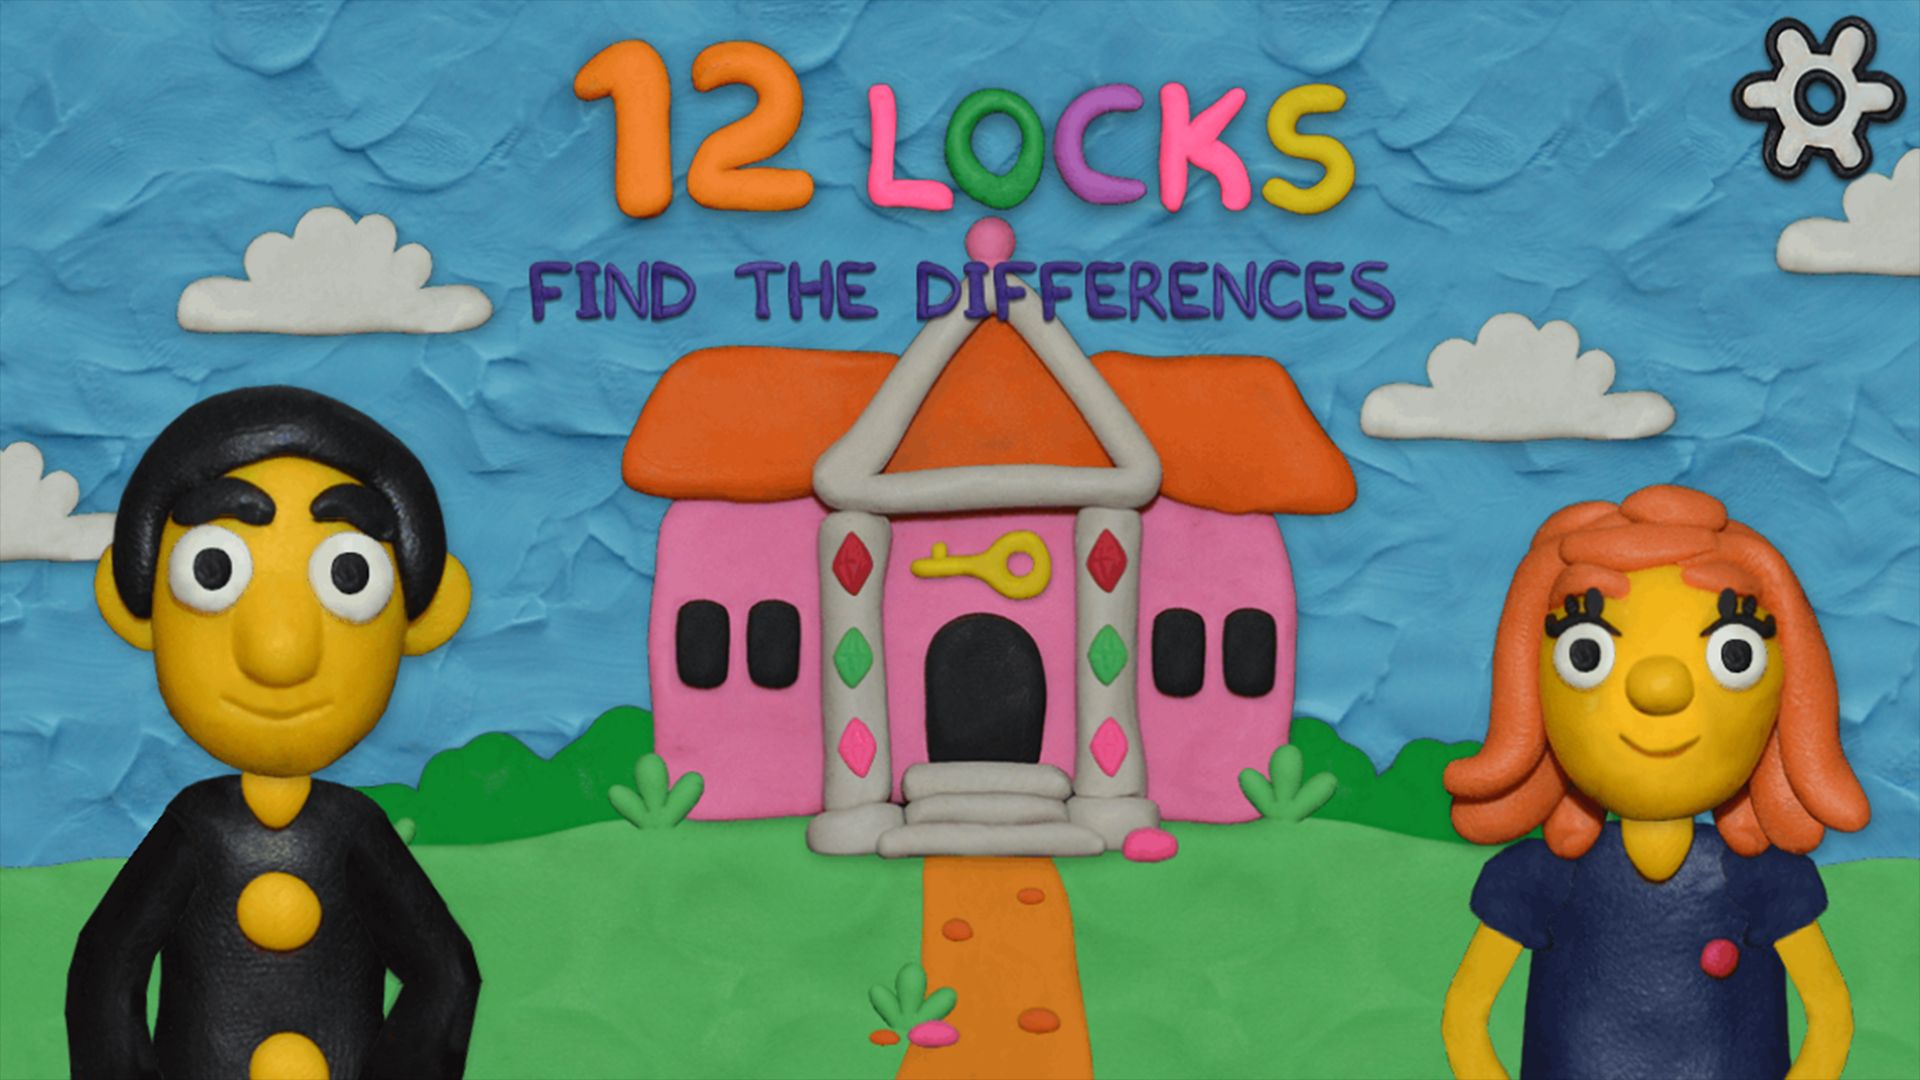 Скачать 12 Locks Find the differences: Android Головоломки игра на телефон и планшет.